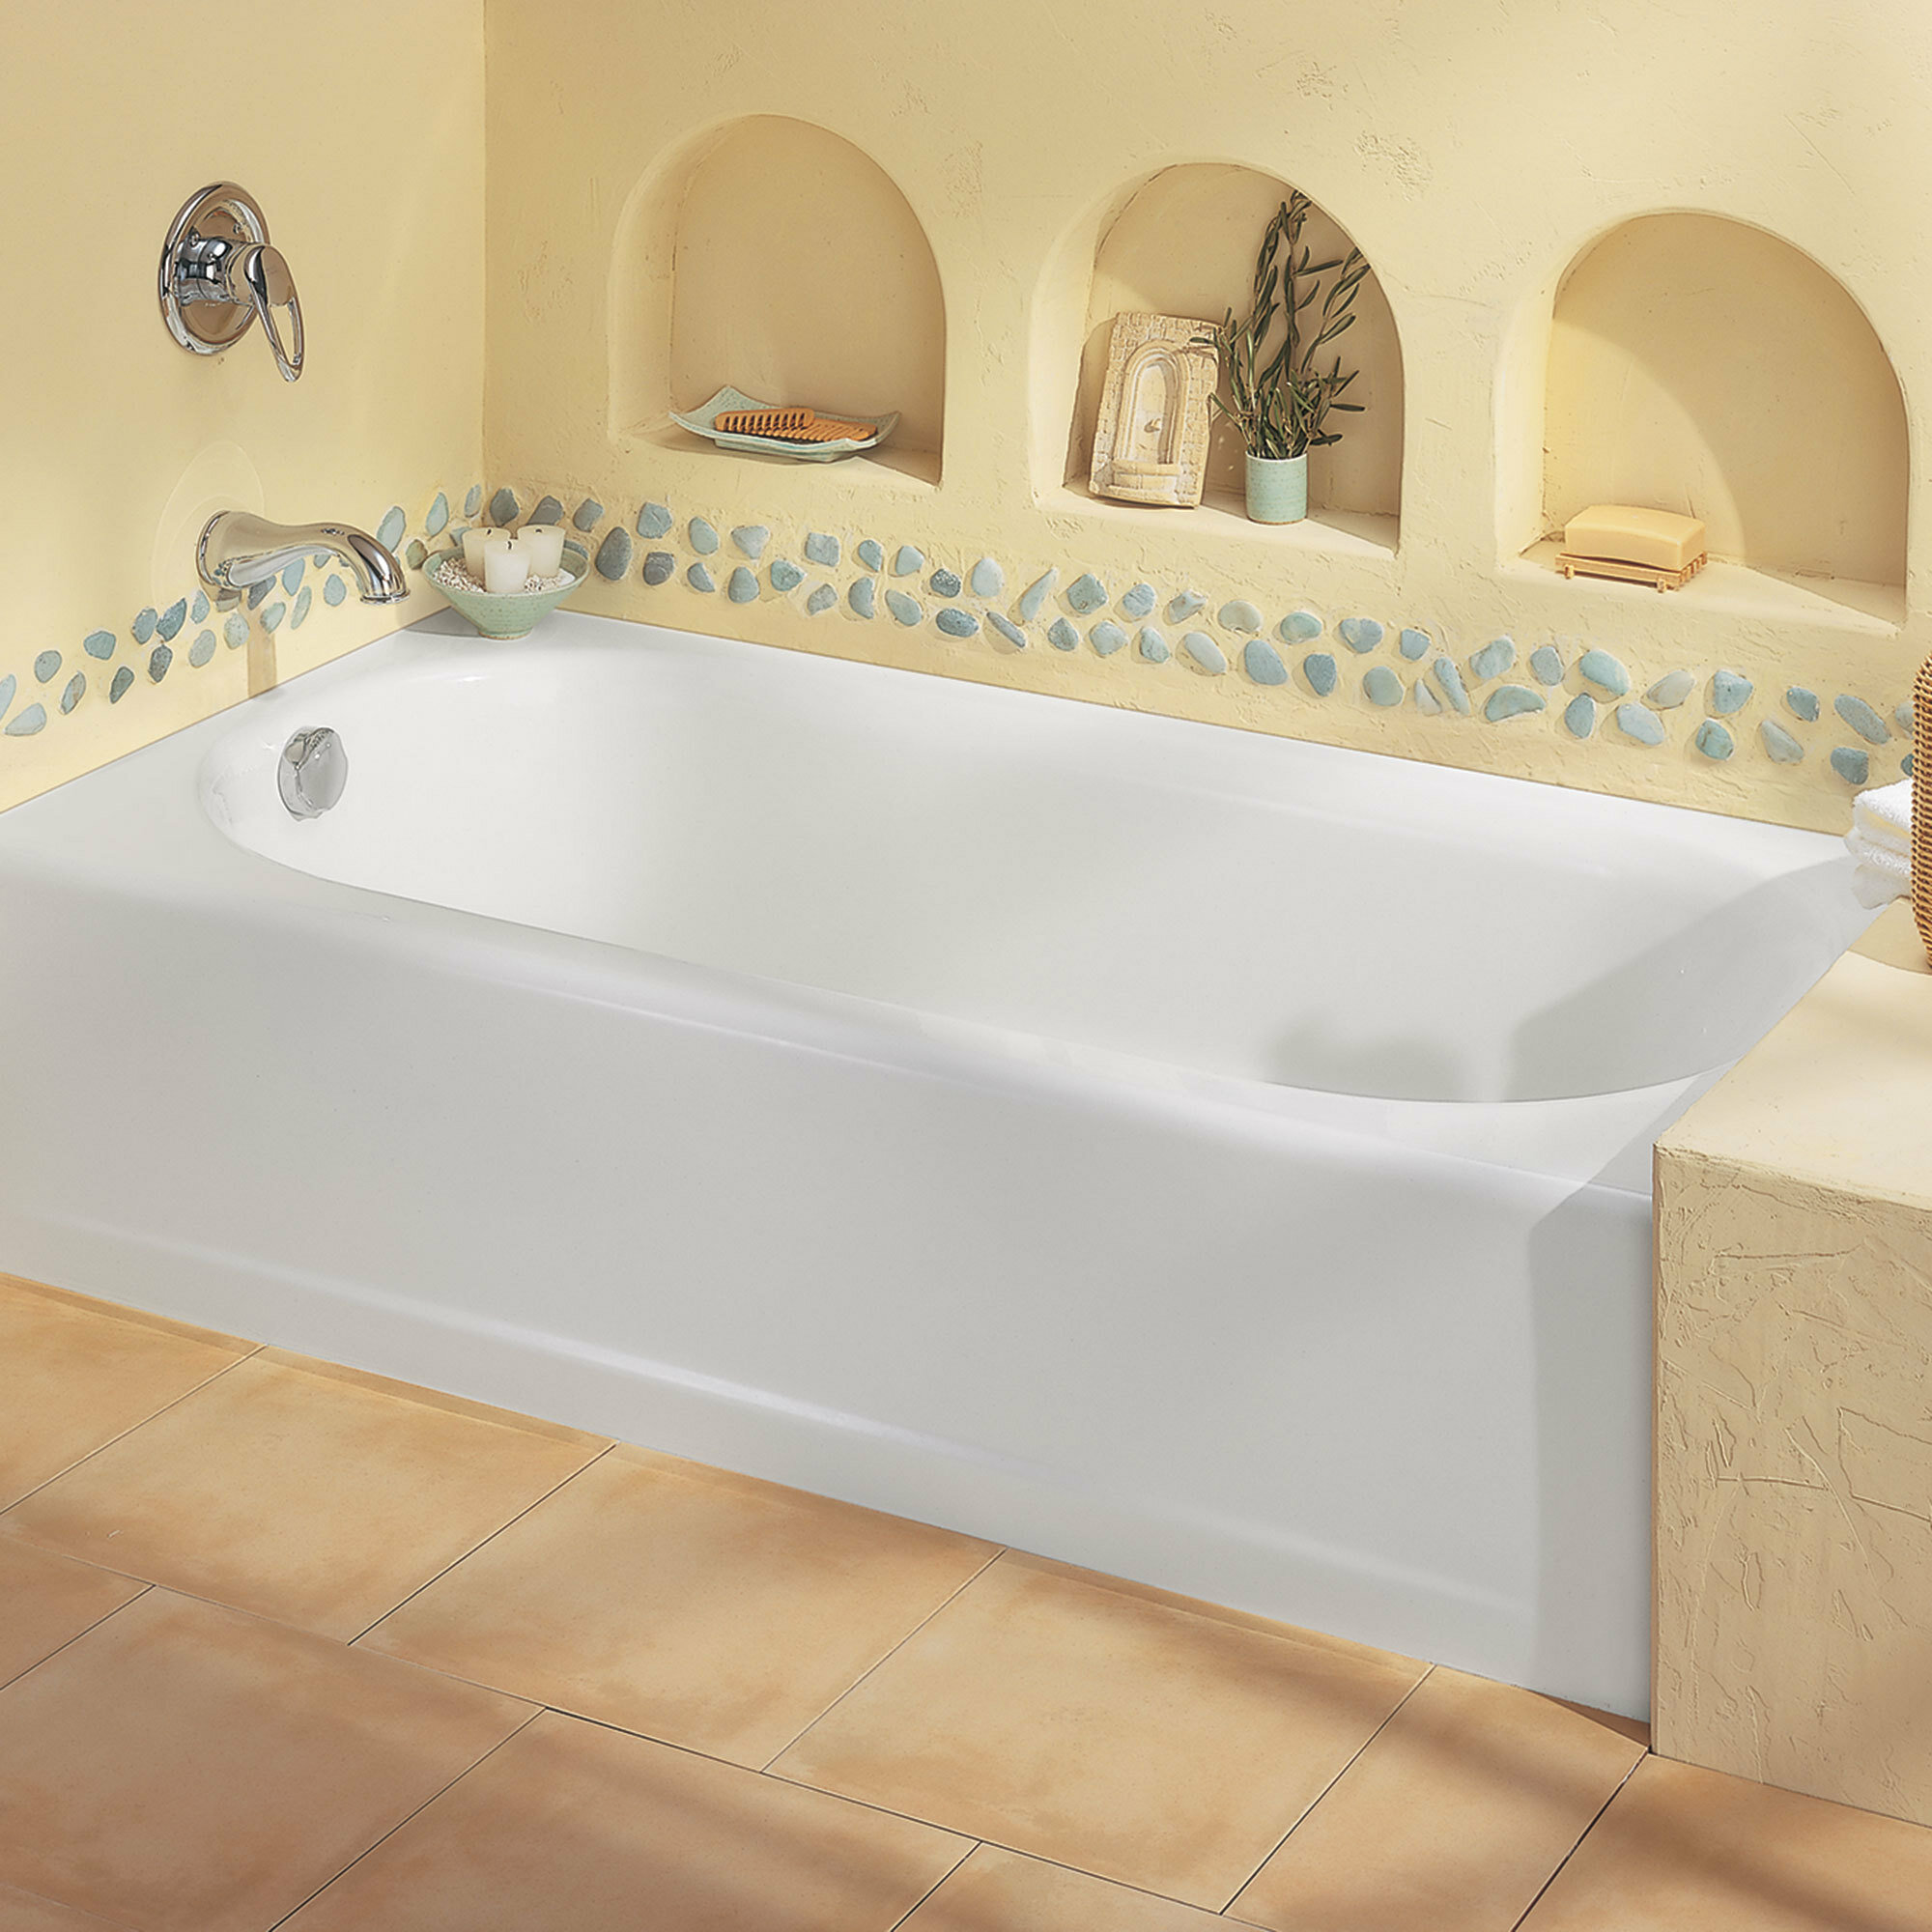 taxa chance Udvej American Standard Princeton 60'' x 30'' Alcove/Tile In Soaking Americast  Bathtub & Reviews | Wayfair